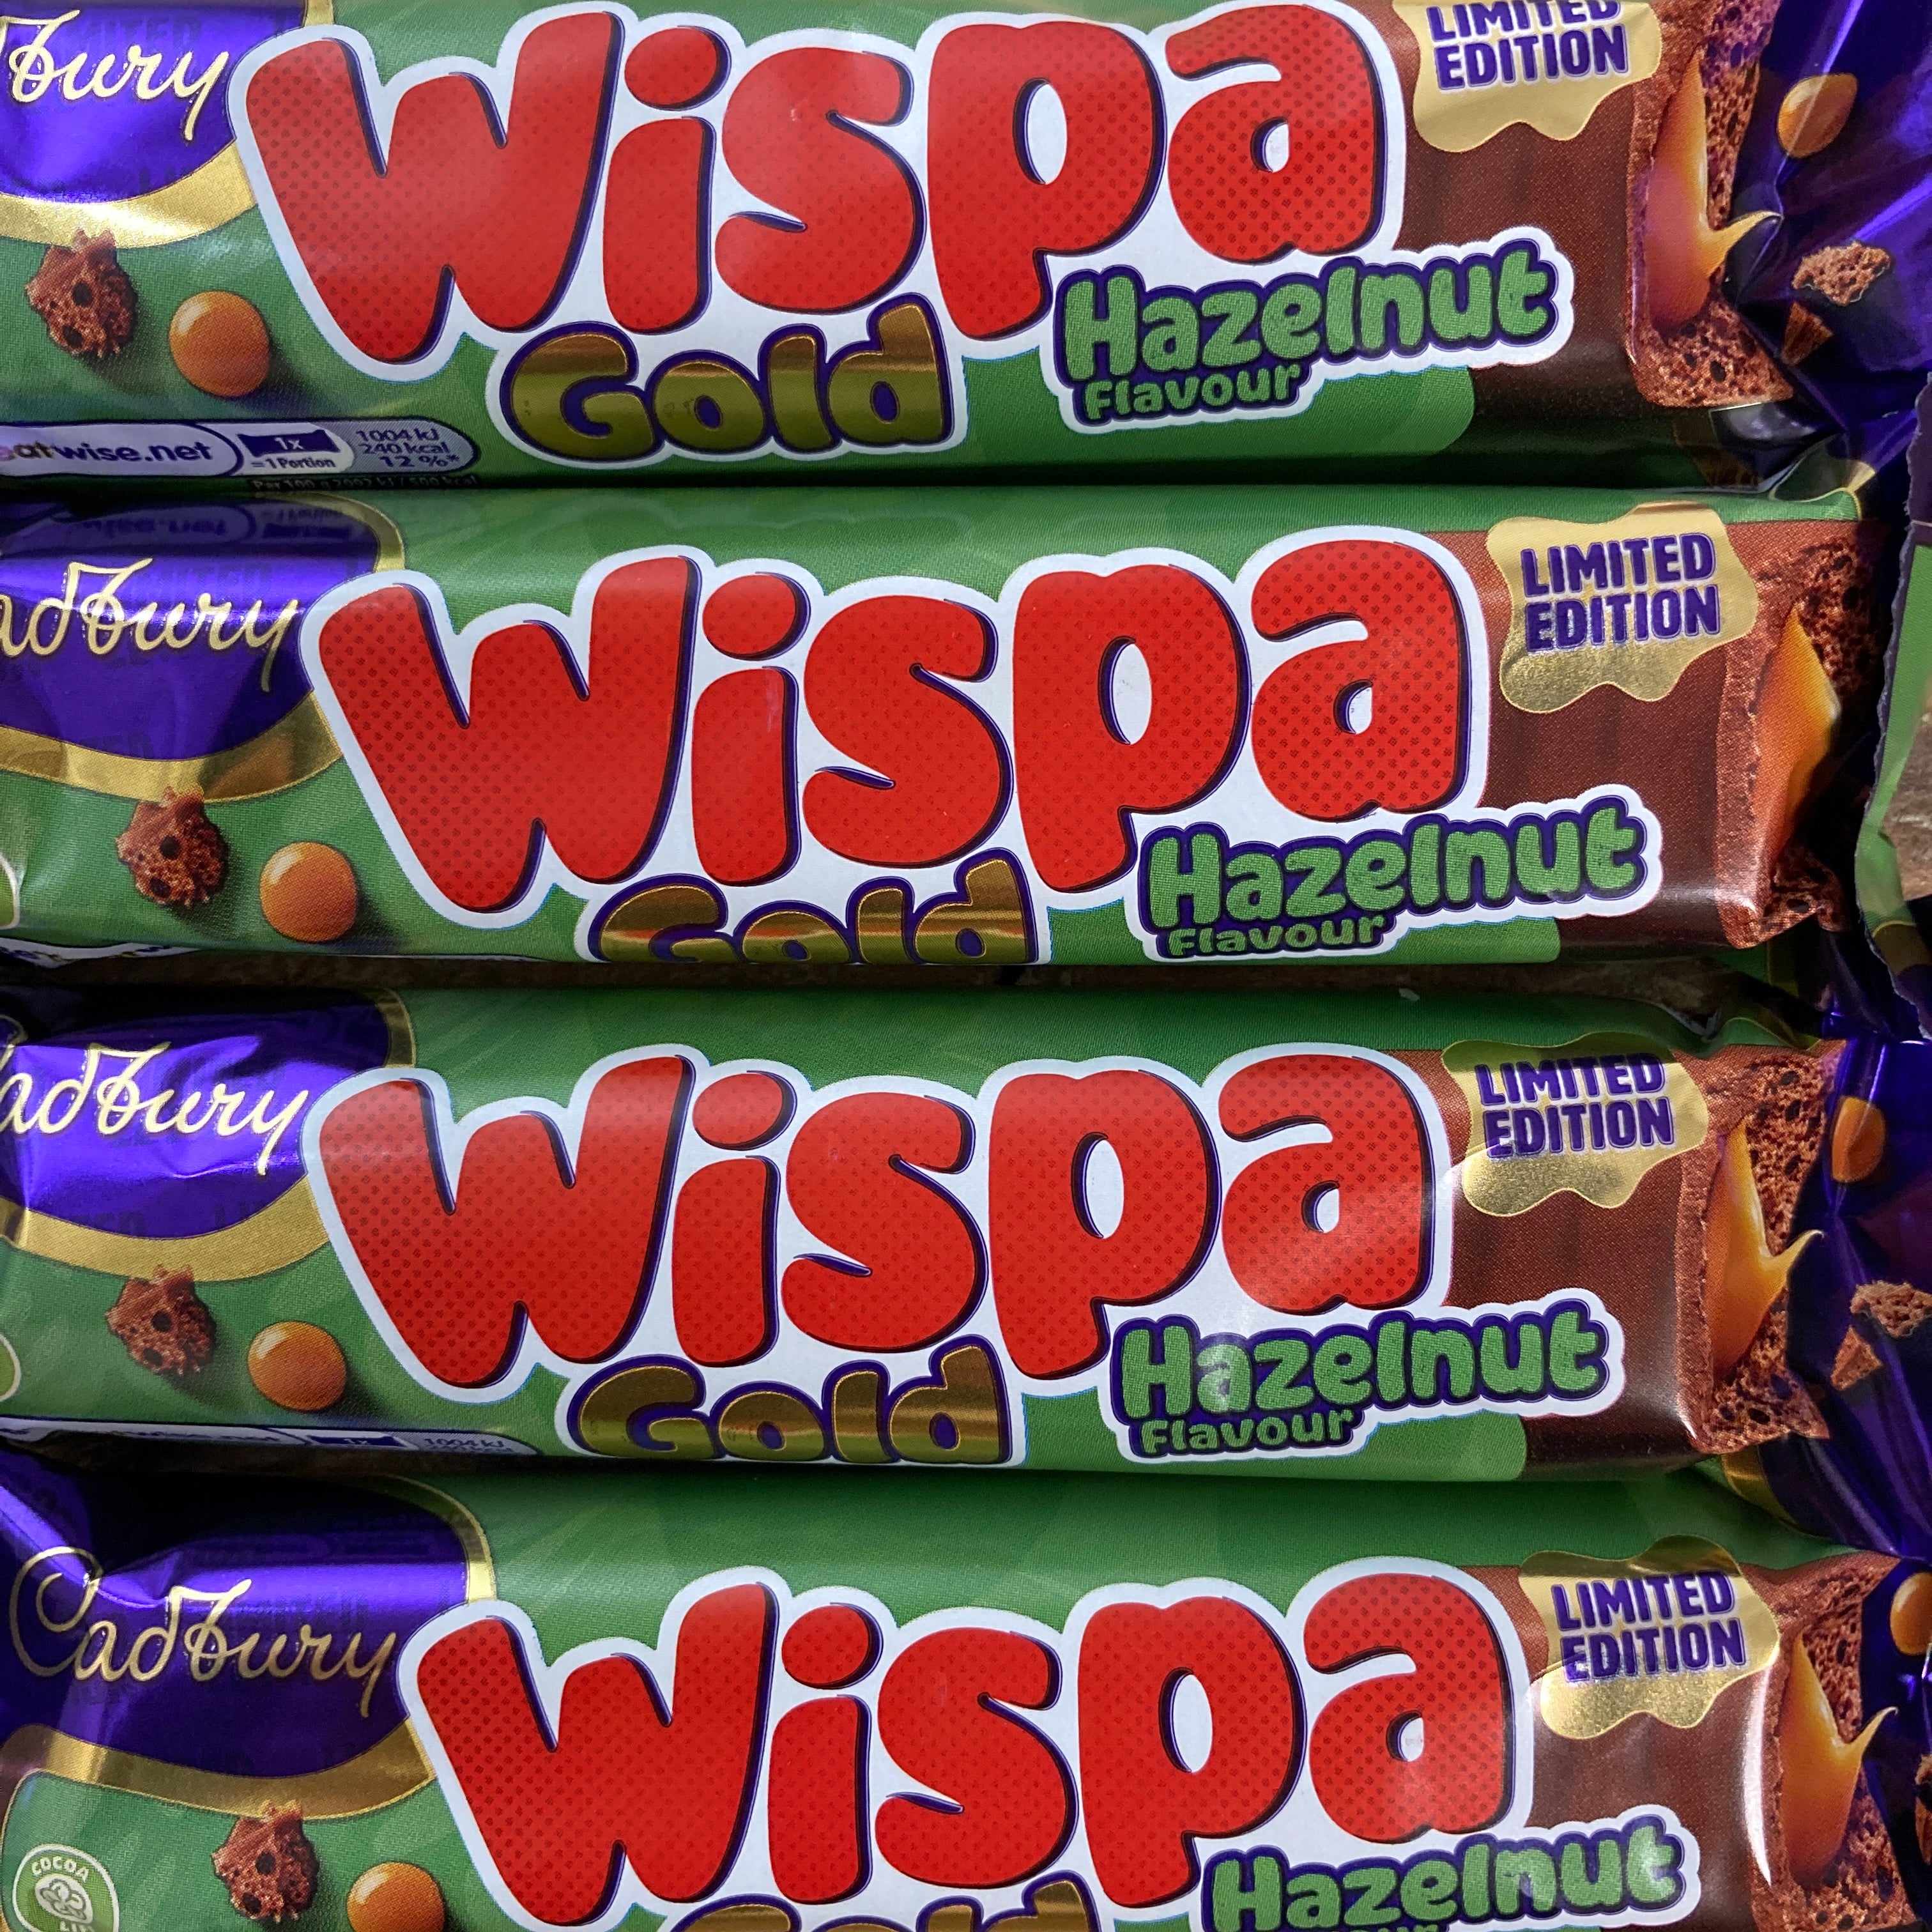 Cadbury's Wispa Gold Review 